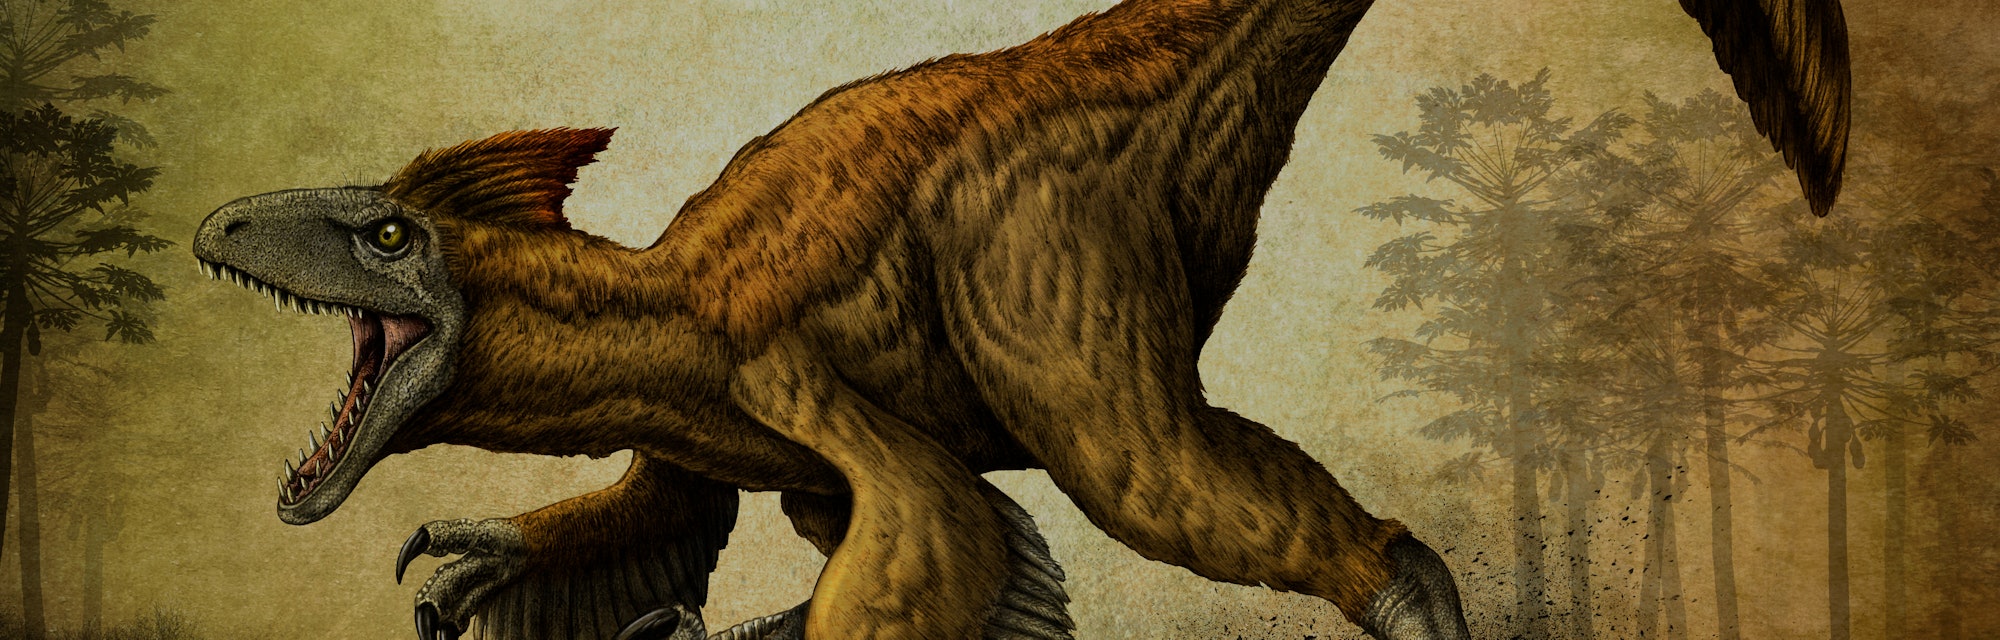 Utahraptor, a large dromaeosaur dinosaur from the Cretaceous Period.